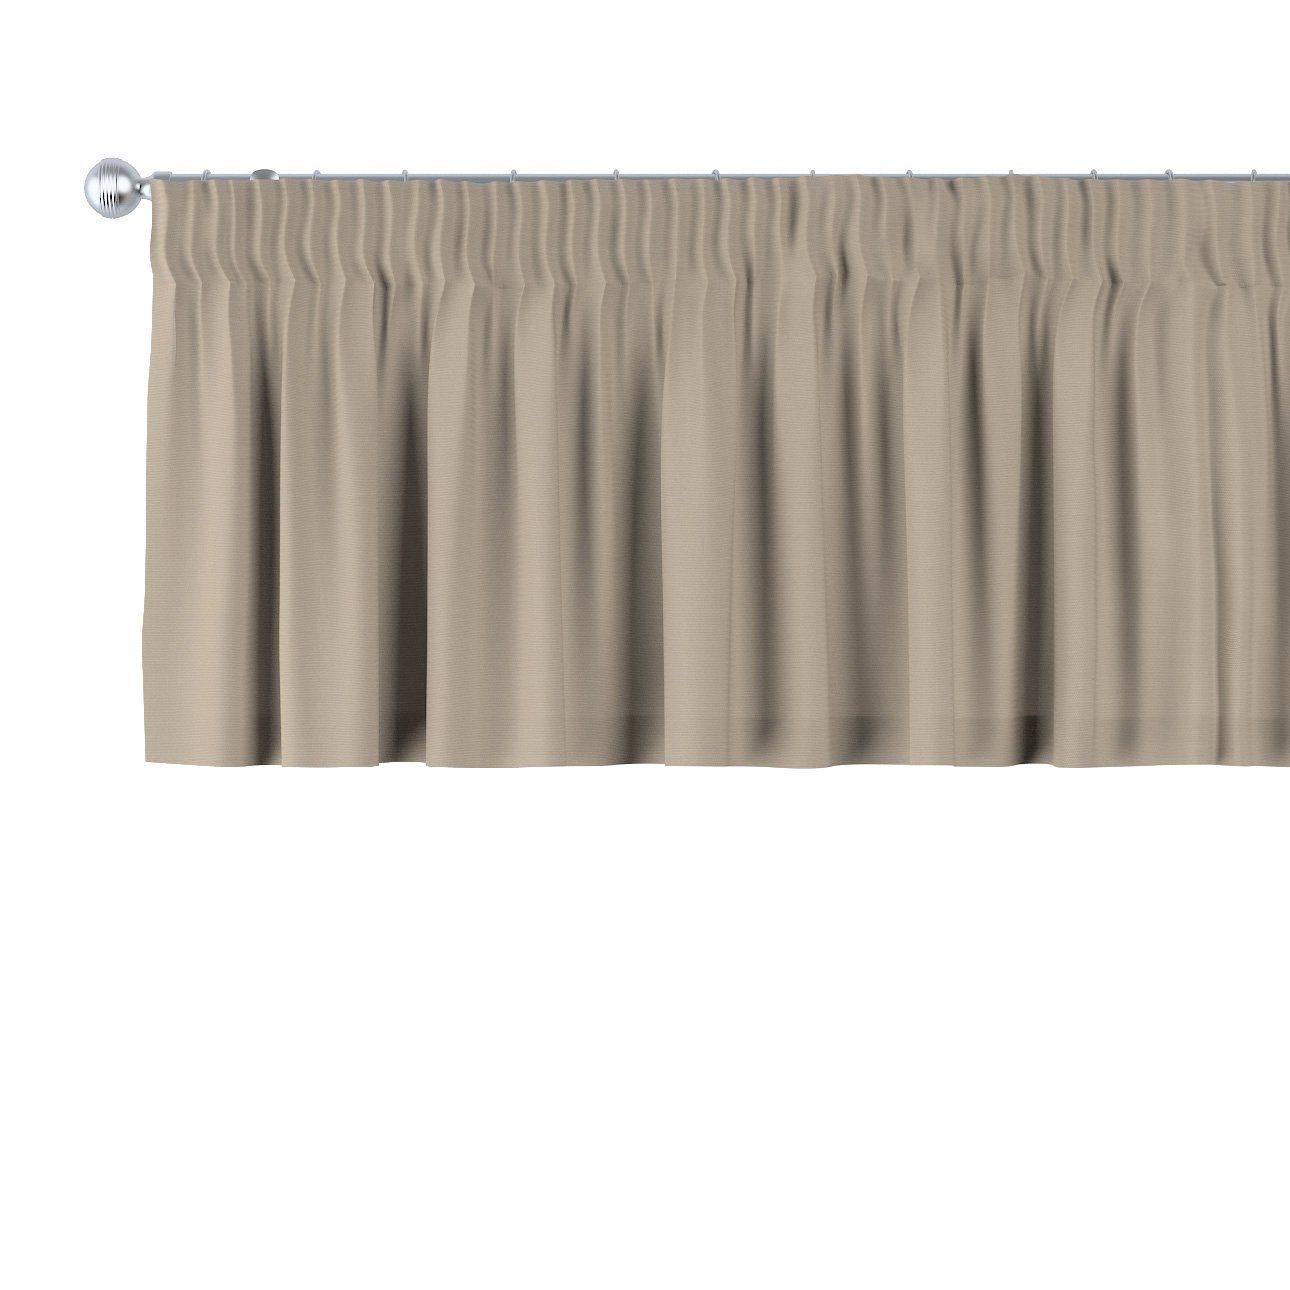 Vorhang mit Kräuselband 130 x 40 cm, Cotton Panama, Dekoria grau-braun